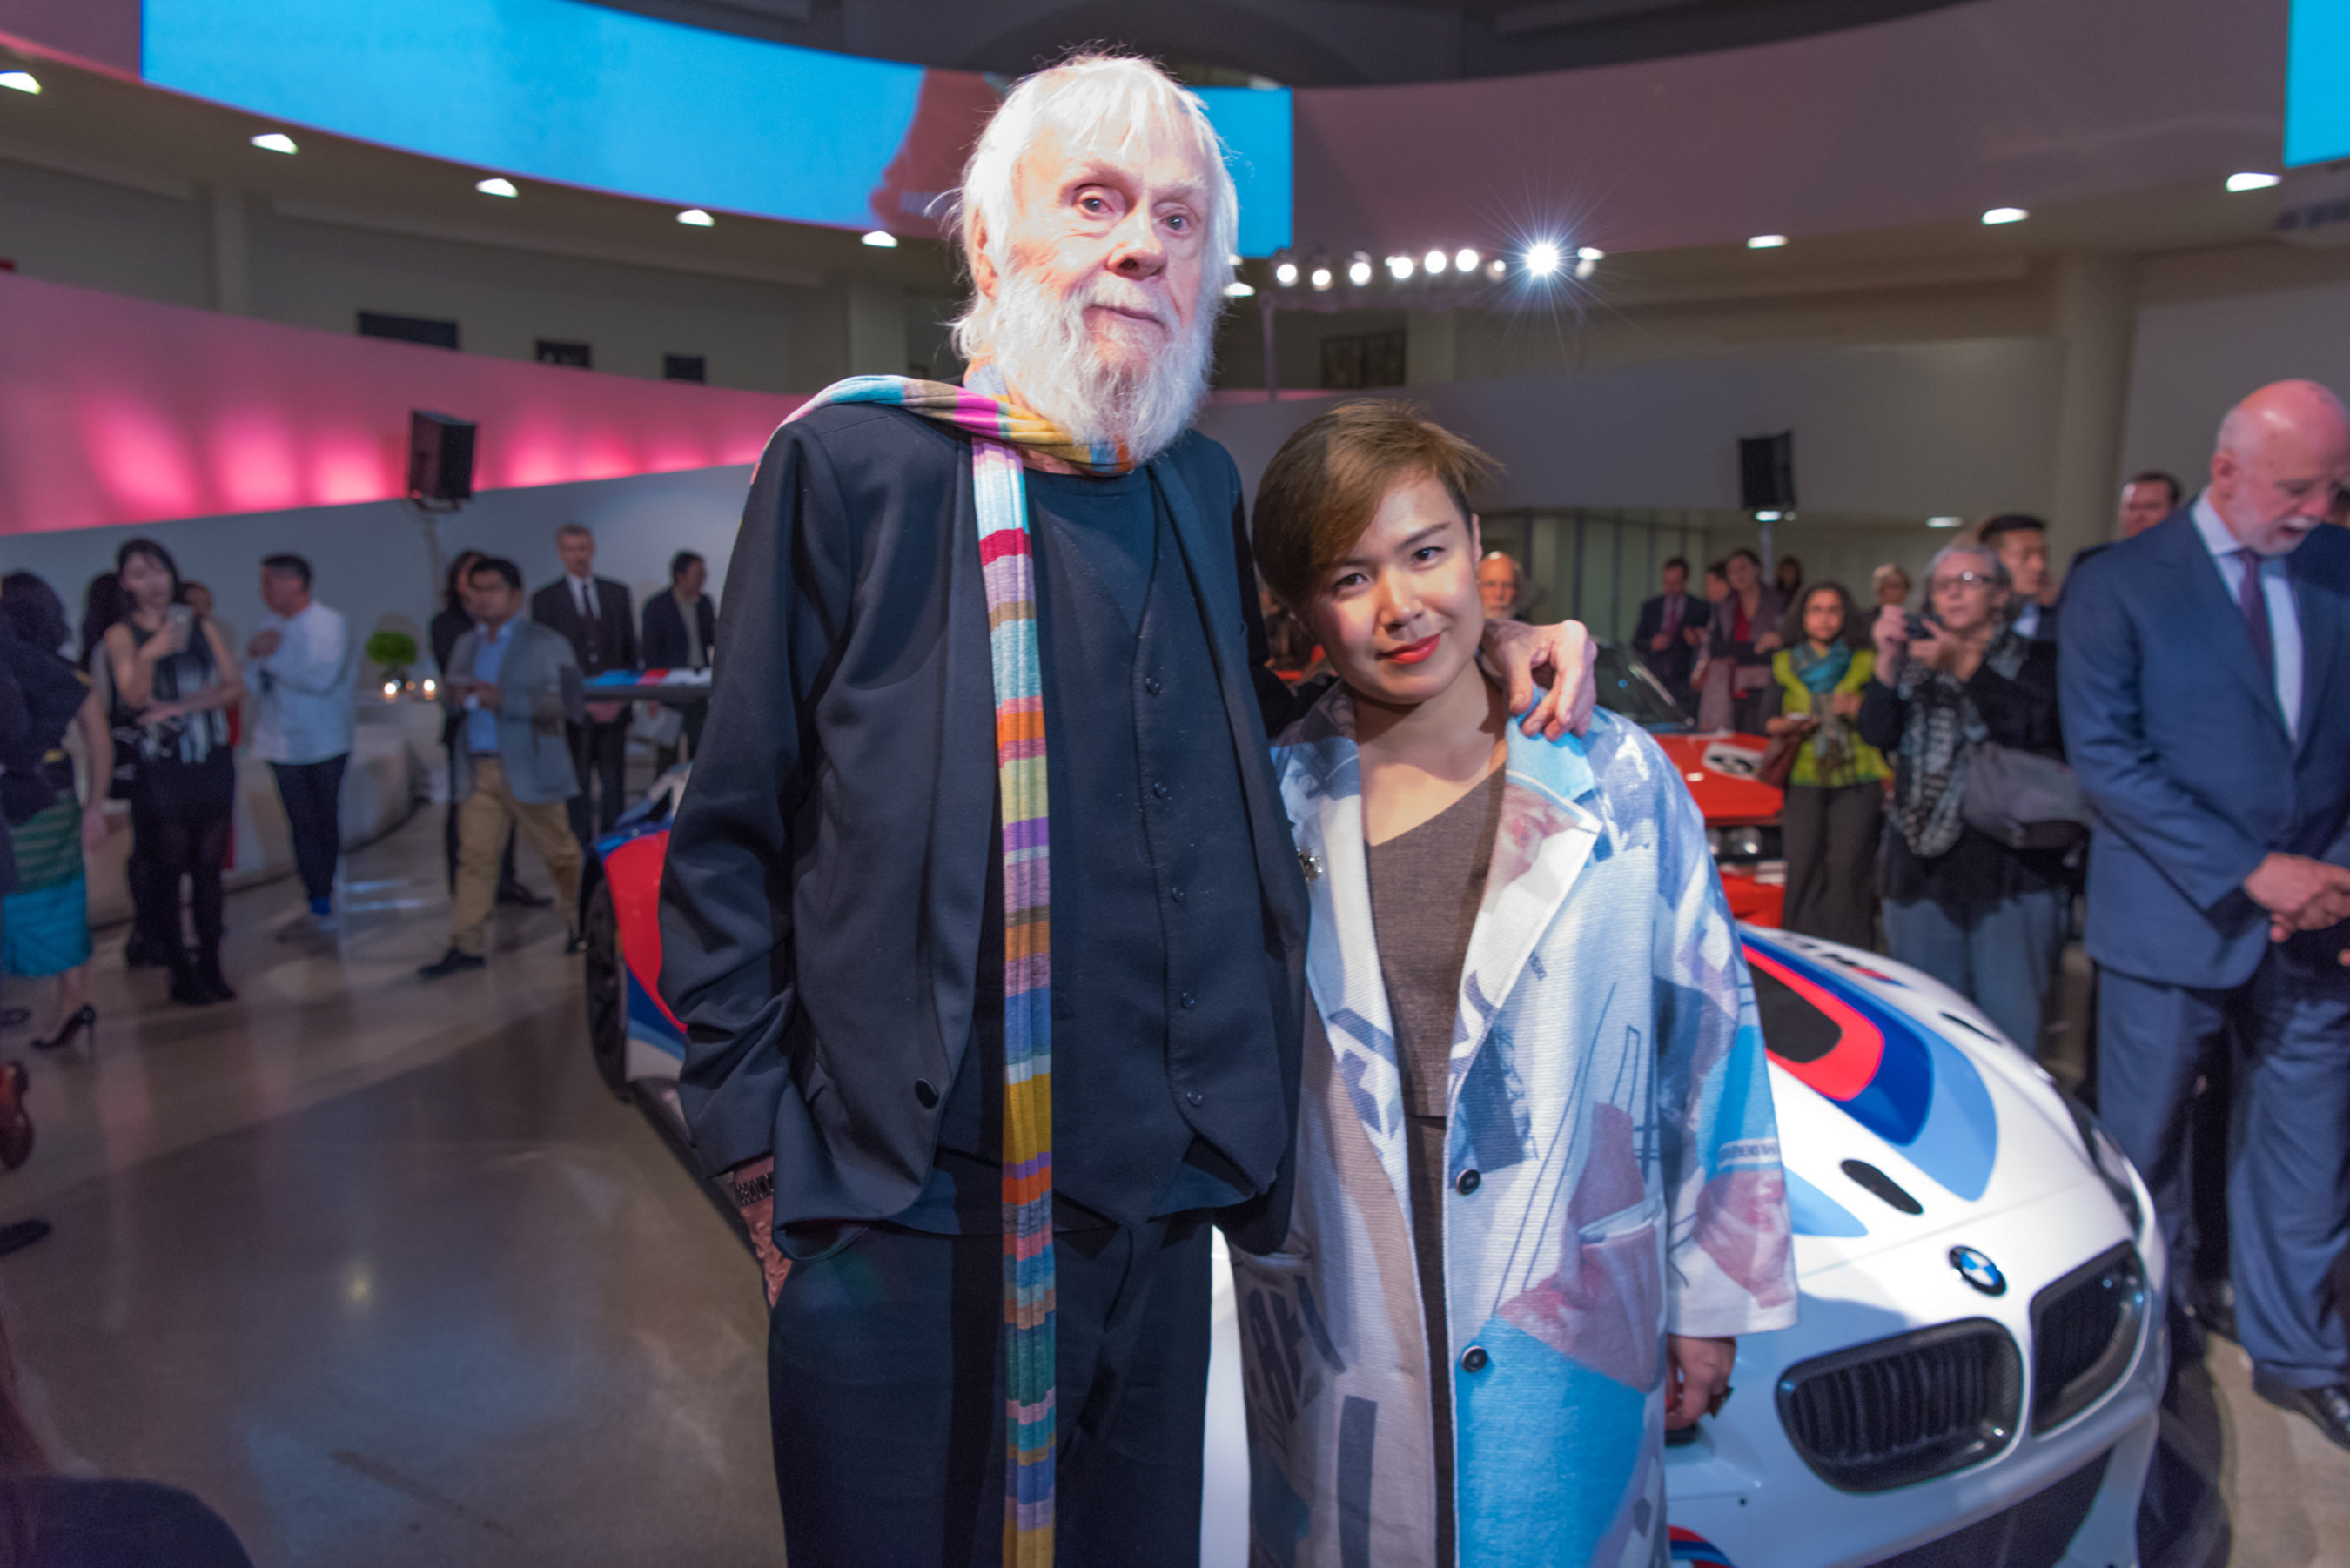 John Baldessari and Cao Fei, the new BMW Art Car artists, at the announcement event at the Guggenheim Museum, New York. (11/2015) (C) BMW AG (PRNewsFoto/BMW Group) (PRNewsFoto/BMW Group)